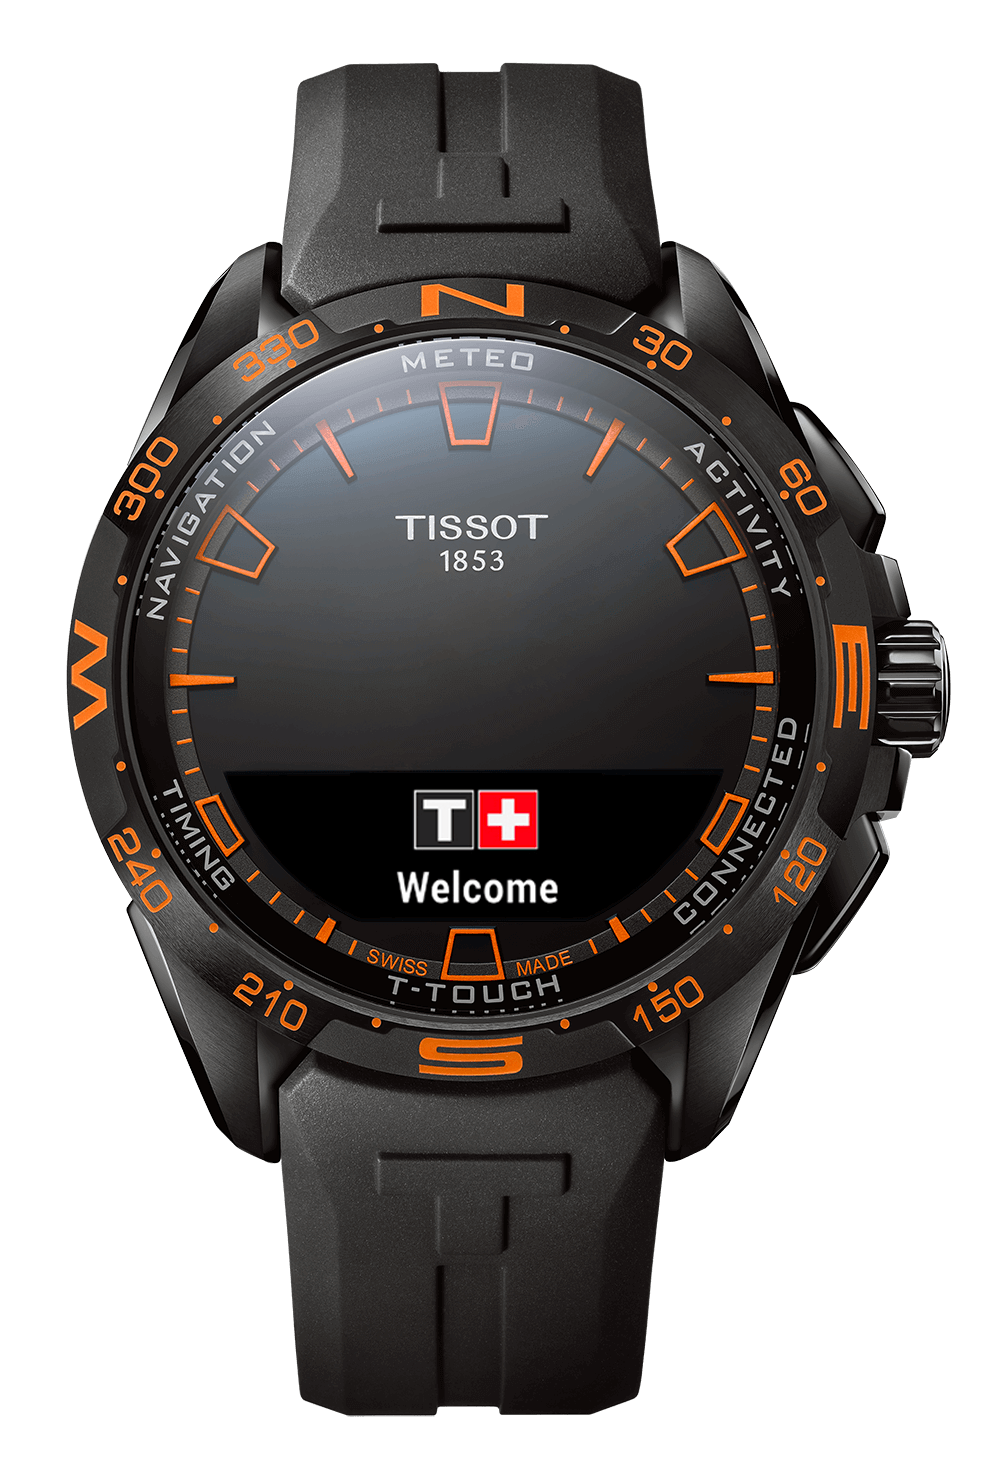 TISSOT T-TOUCH CONNECT SOLAR | Tissot® Official Website